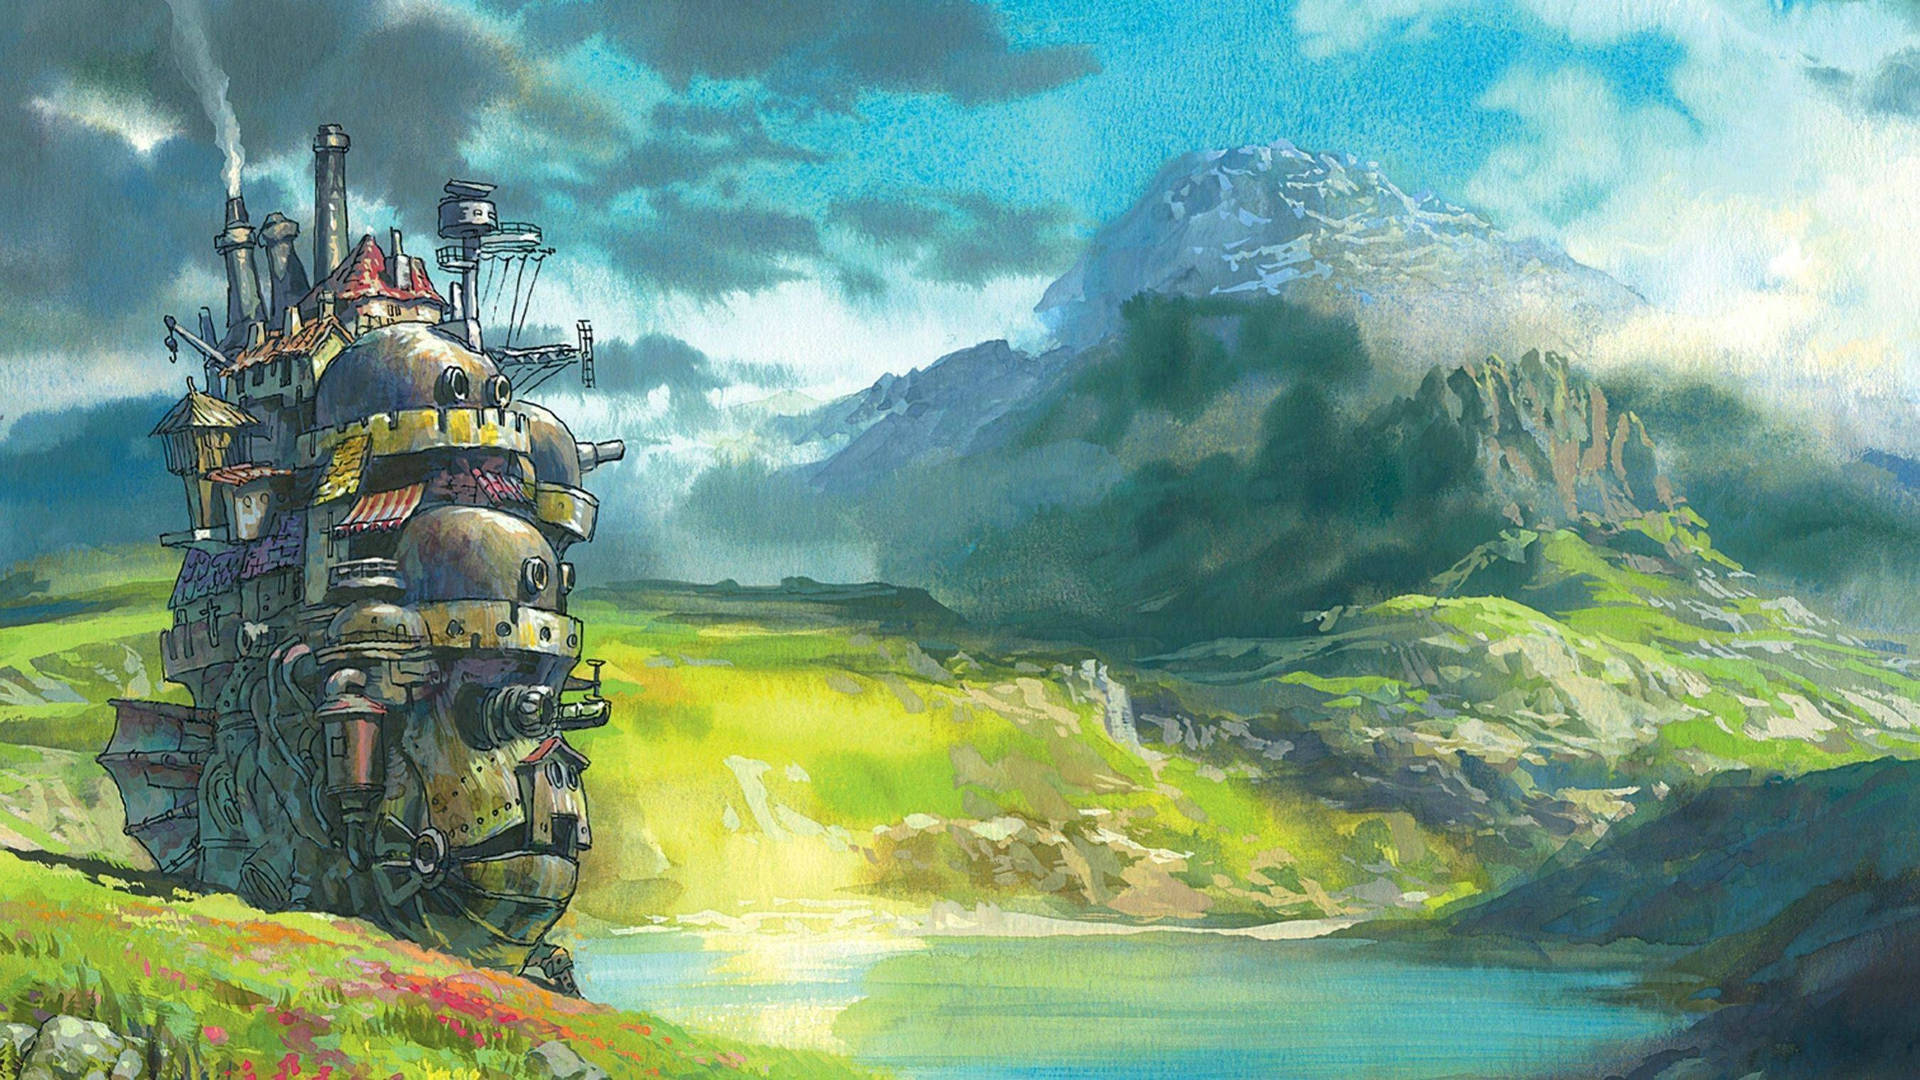 Studio Ghibli Howl's Moving Castle